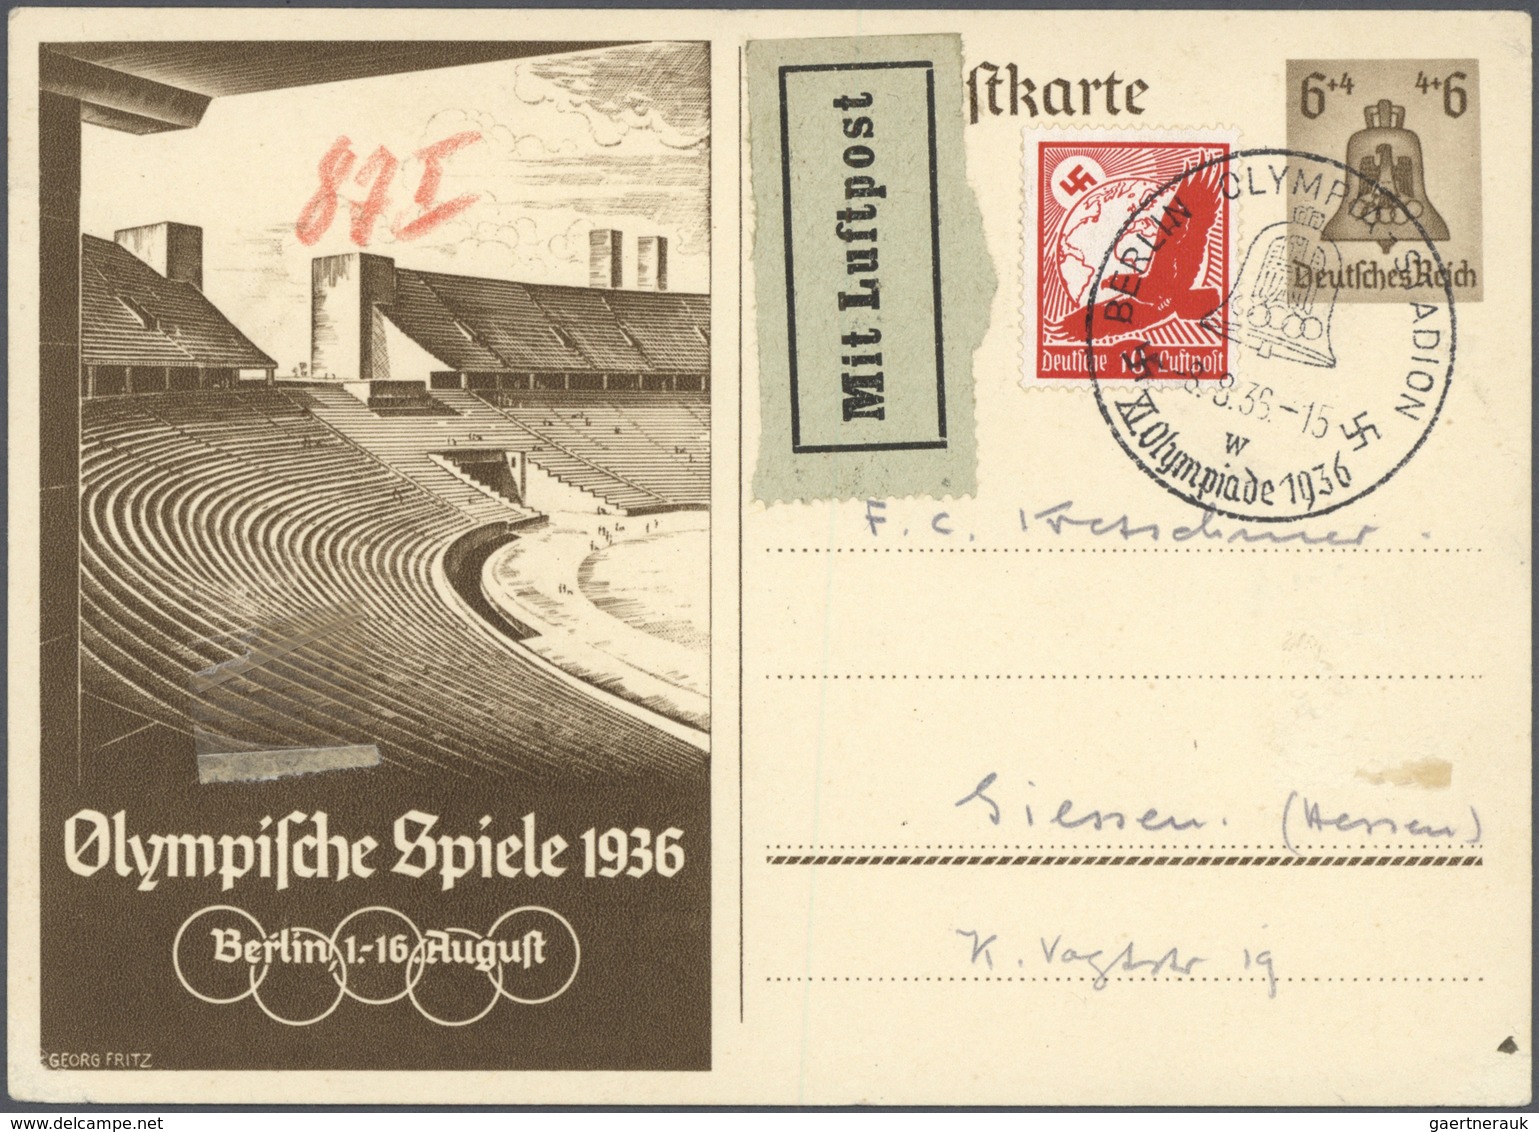 25270 Thematik: Olympische Spiele / olympic games: 1936, Olympia Ganzsachenkarton 6 Pfg. bzw. 15 Pfg. aus